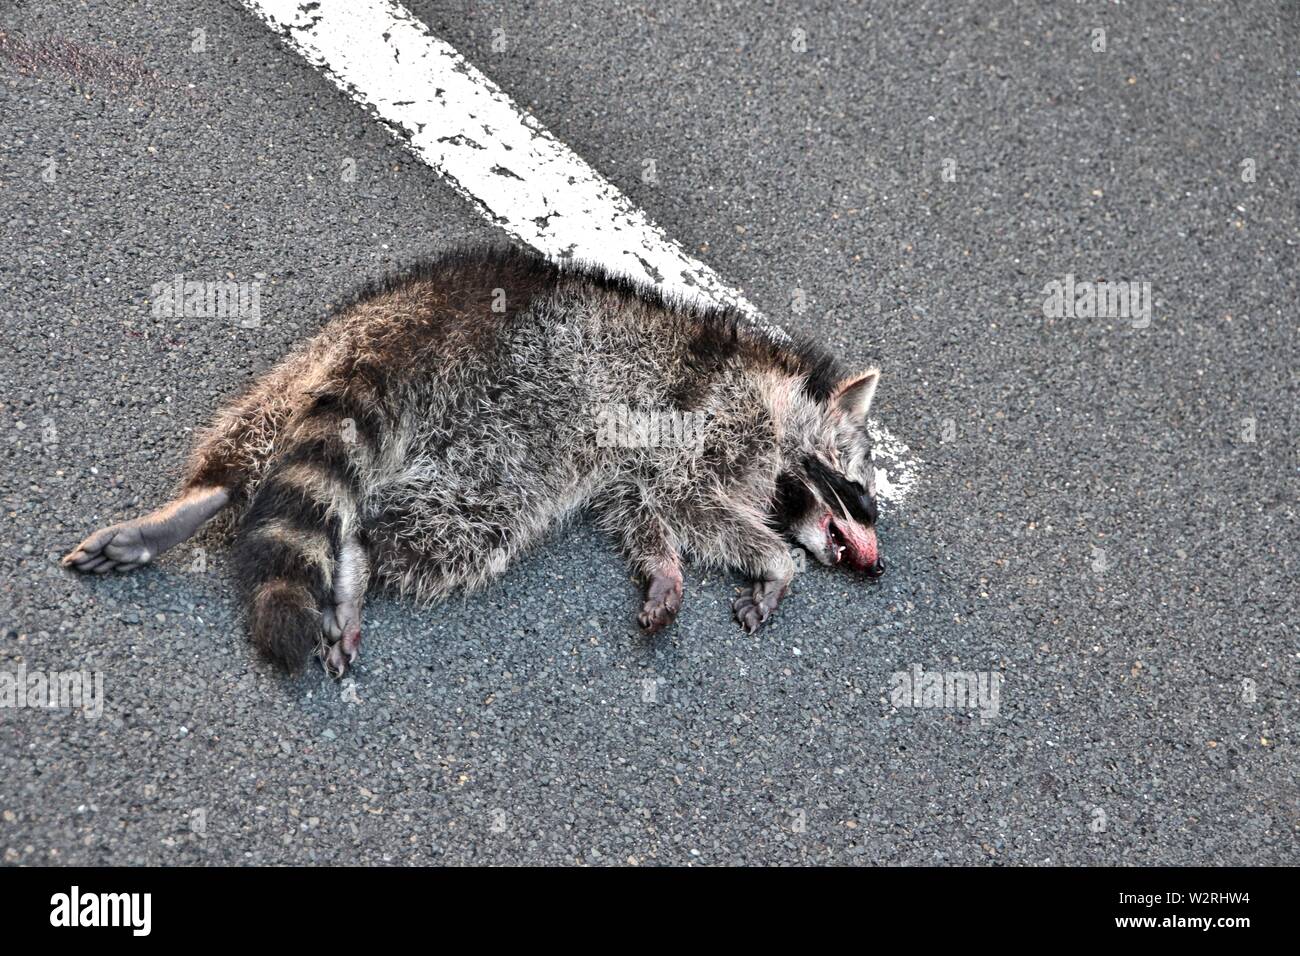 dead raccoon clipart image